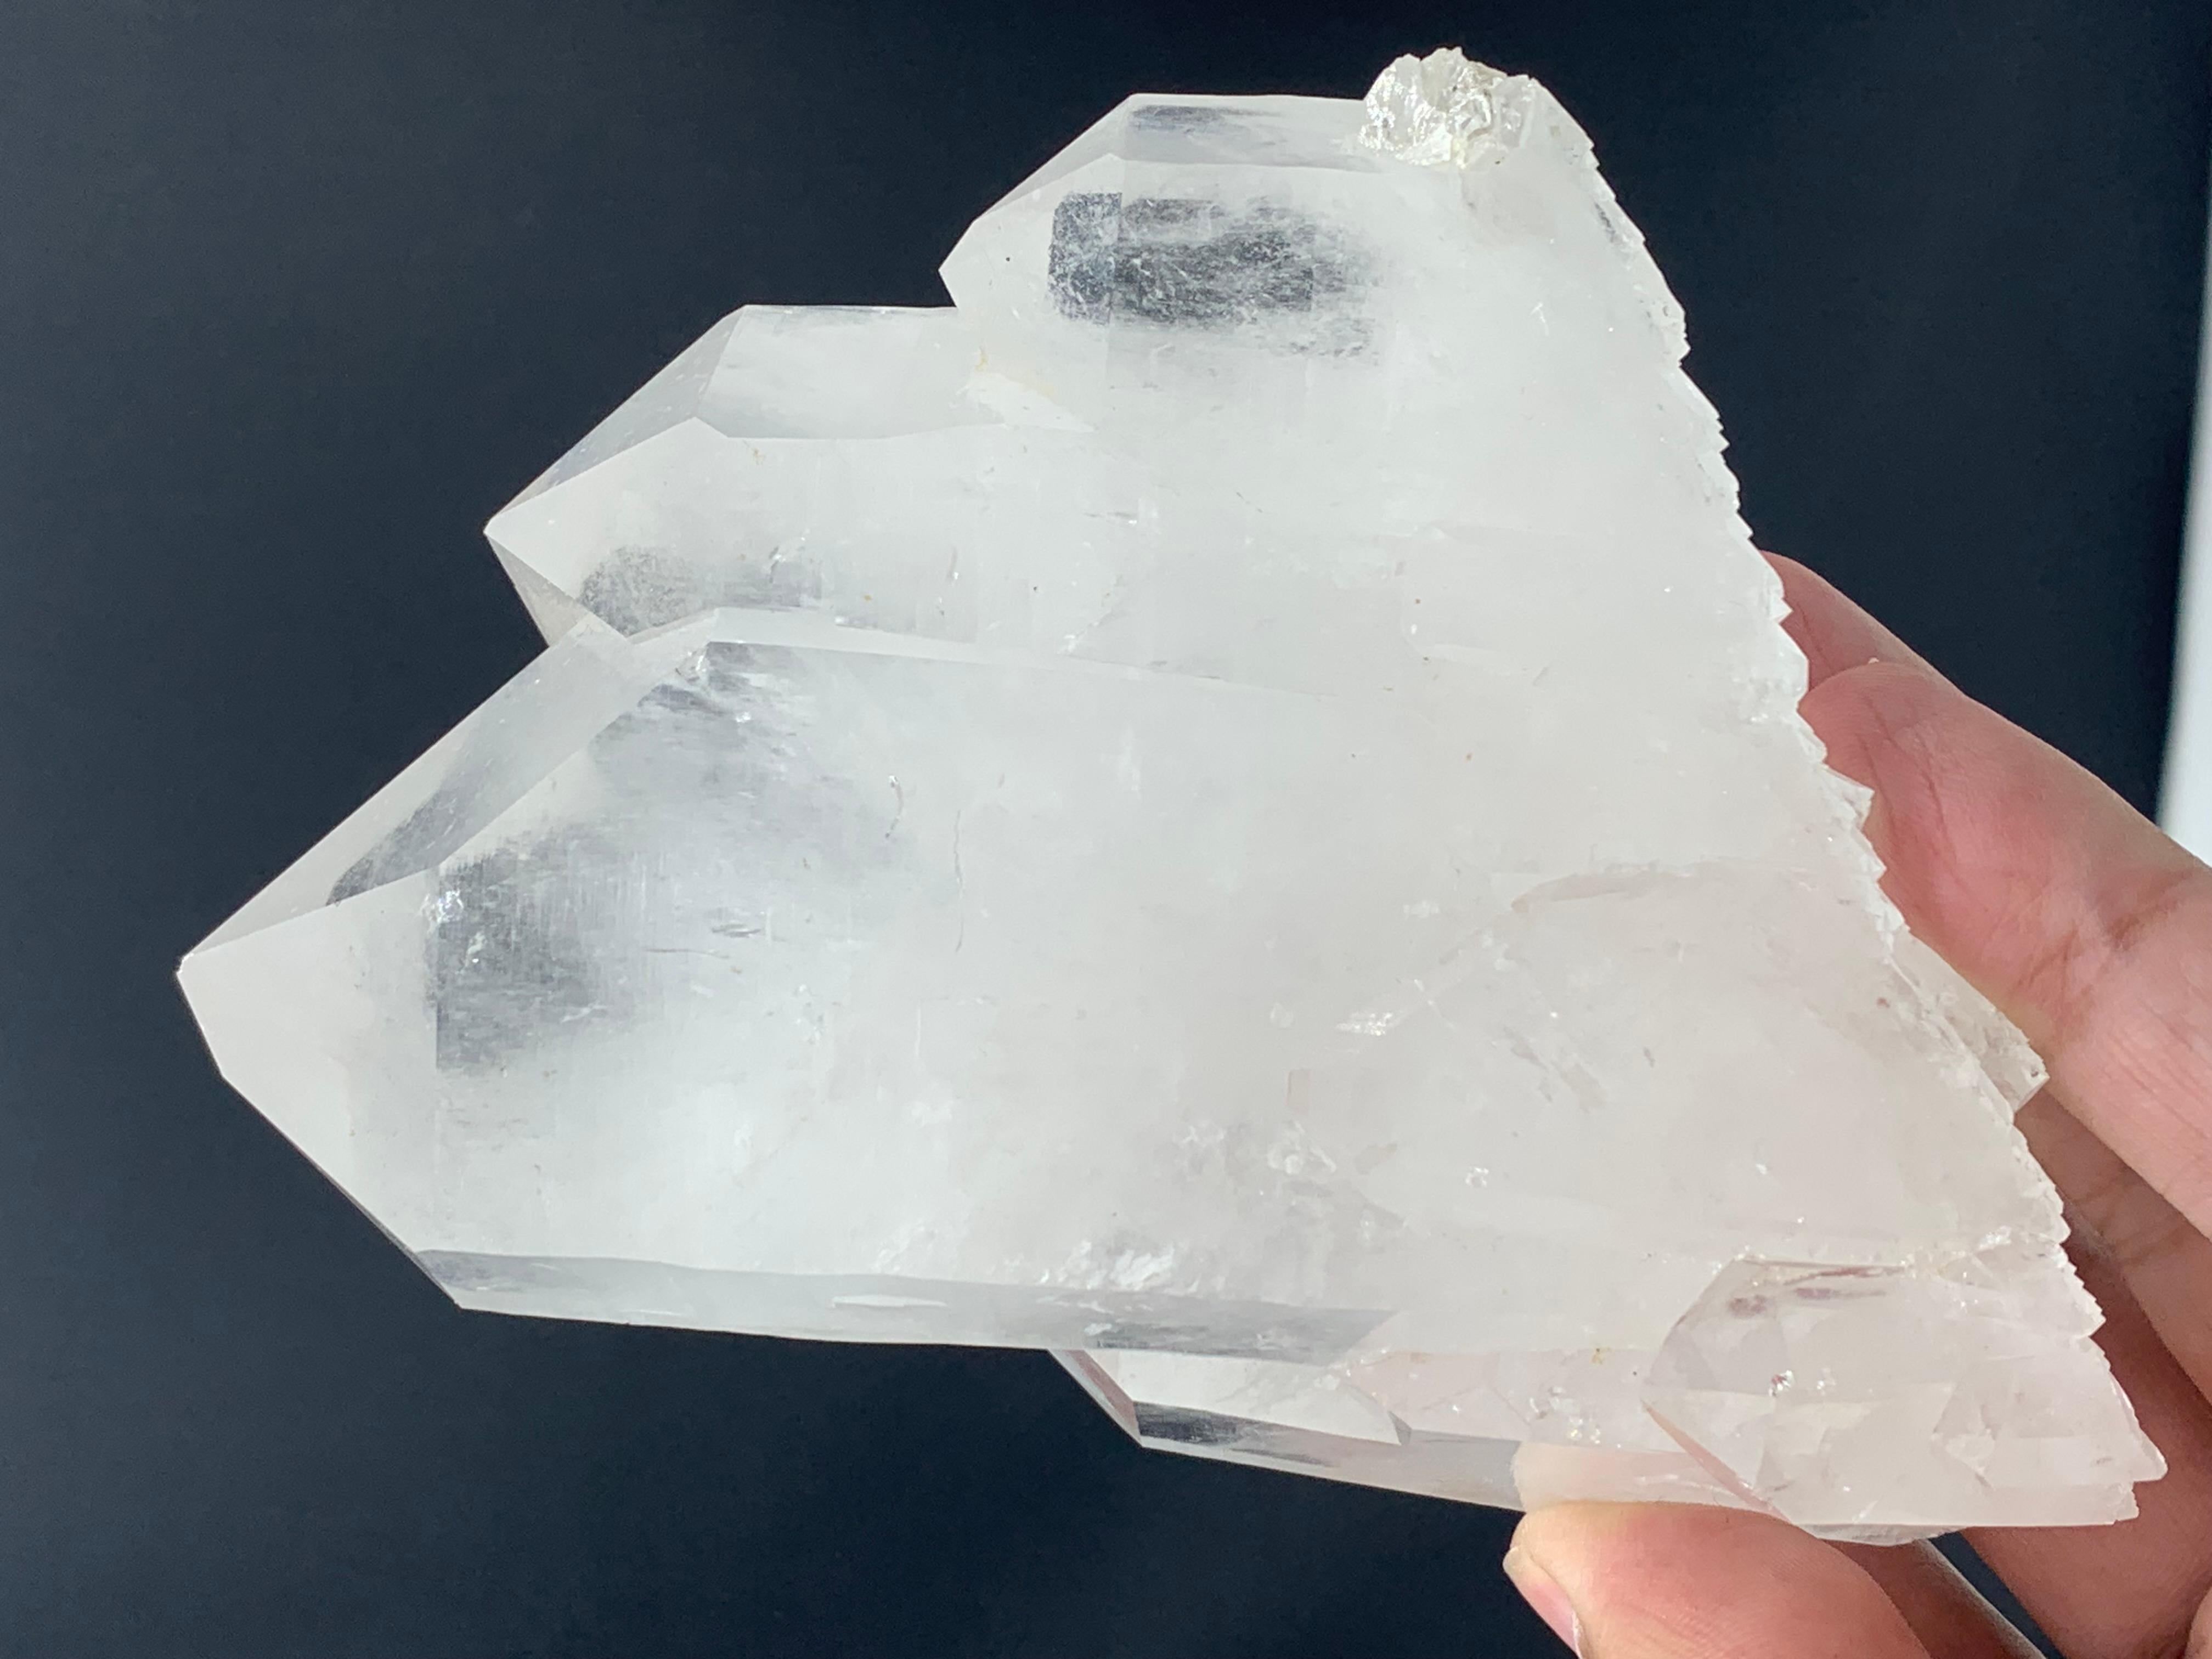 519.99 Gram Huge Quartz Specimen From Skardu, Pakistan 
Weight: 519.99 Gram
Dimension: 12.4 x 8.8 x 4.2 Cm
Origin: Skardu, Pakistan 

Quartz is one of the most common minerals in the Earth's crust. As a mineral name, quartz refers to a specific